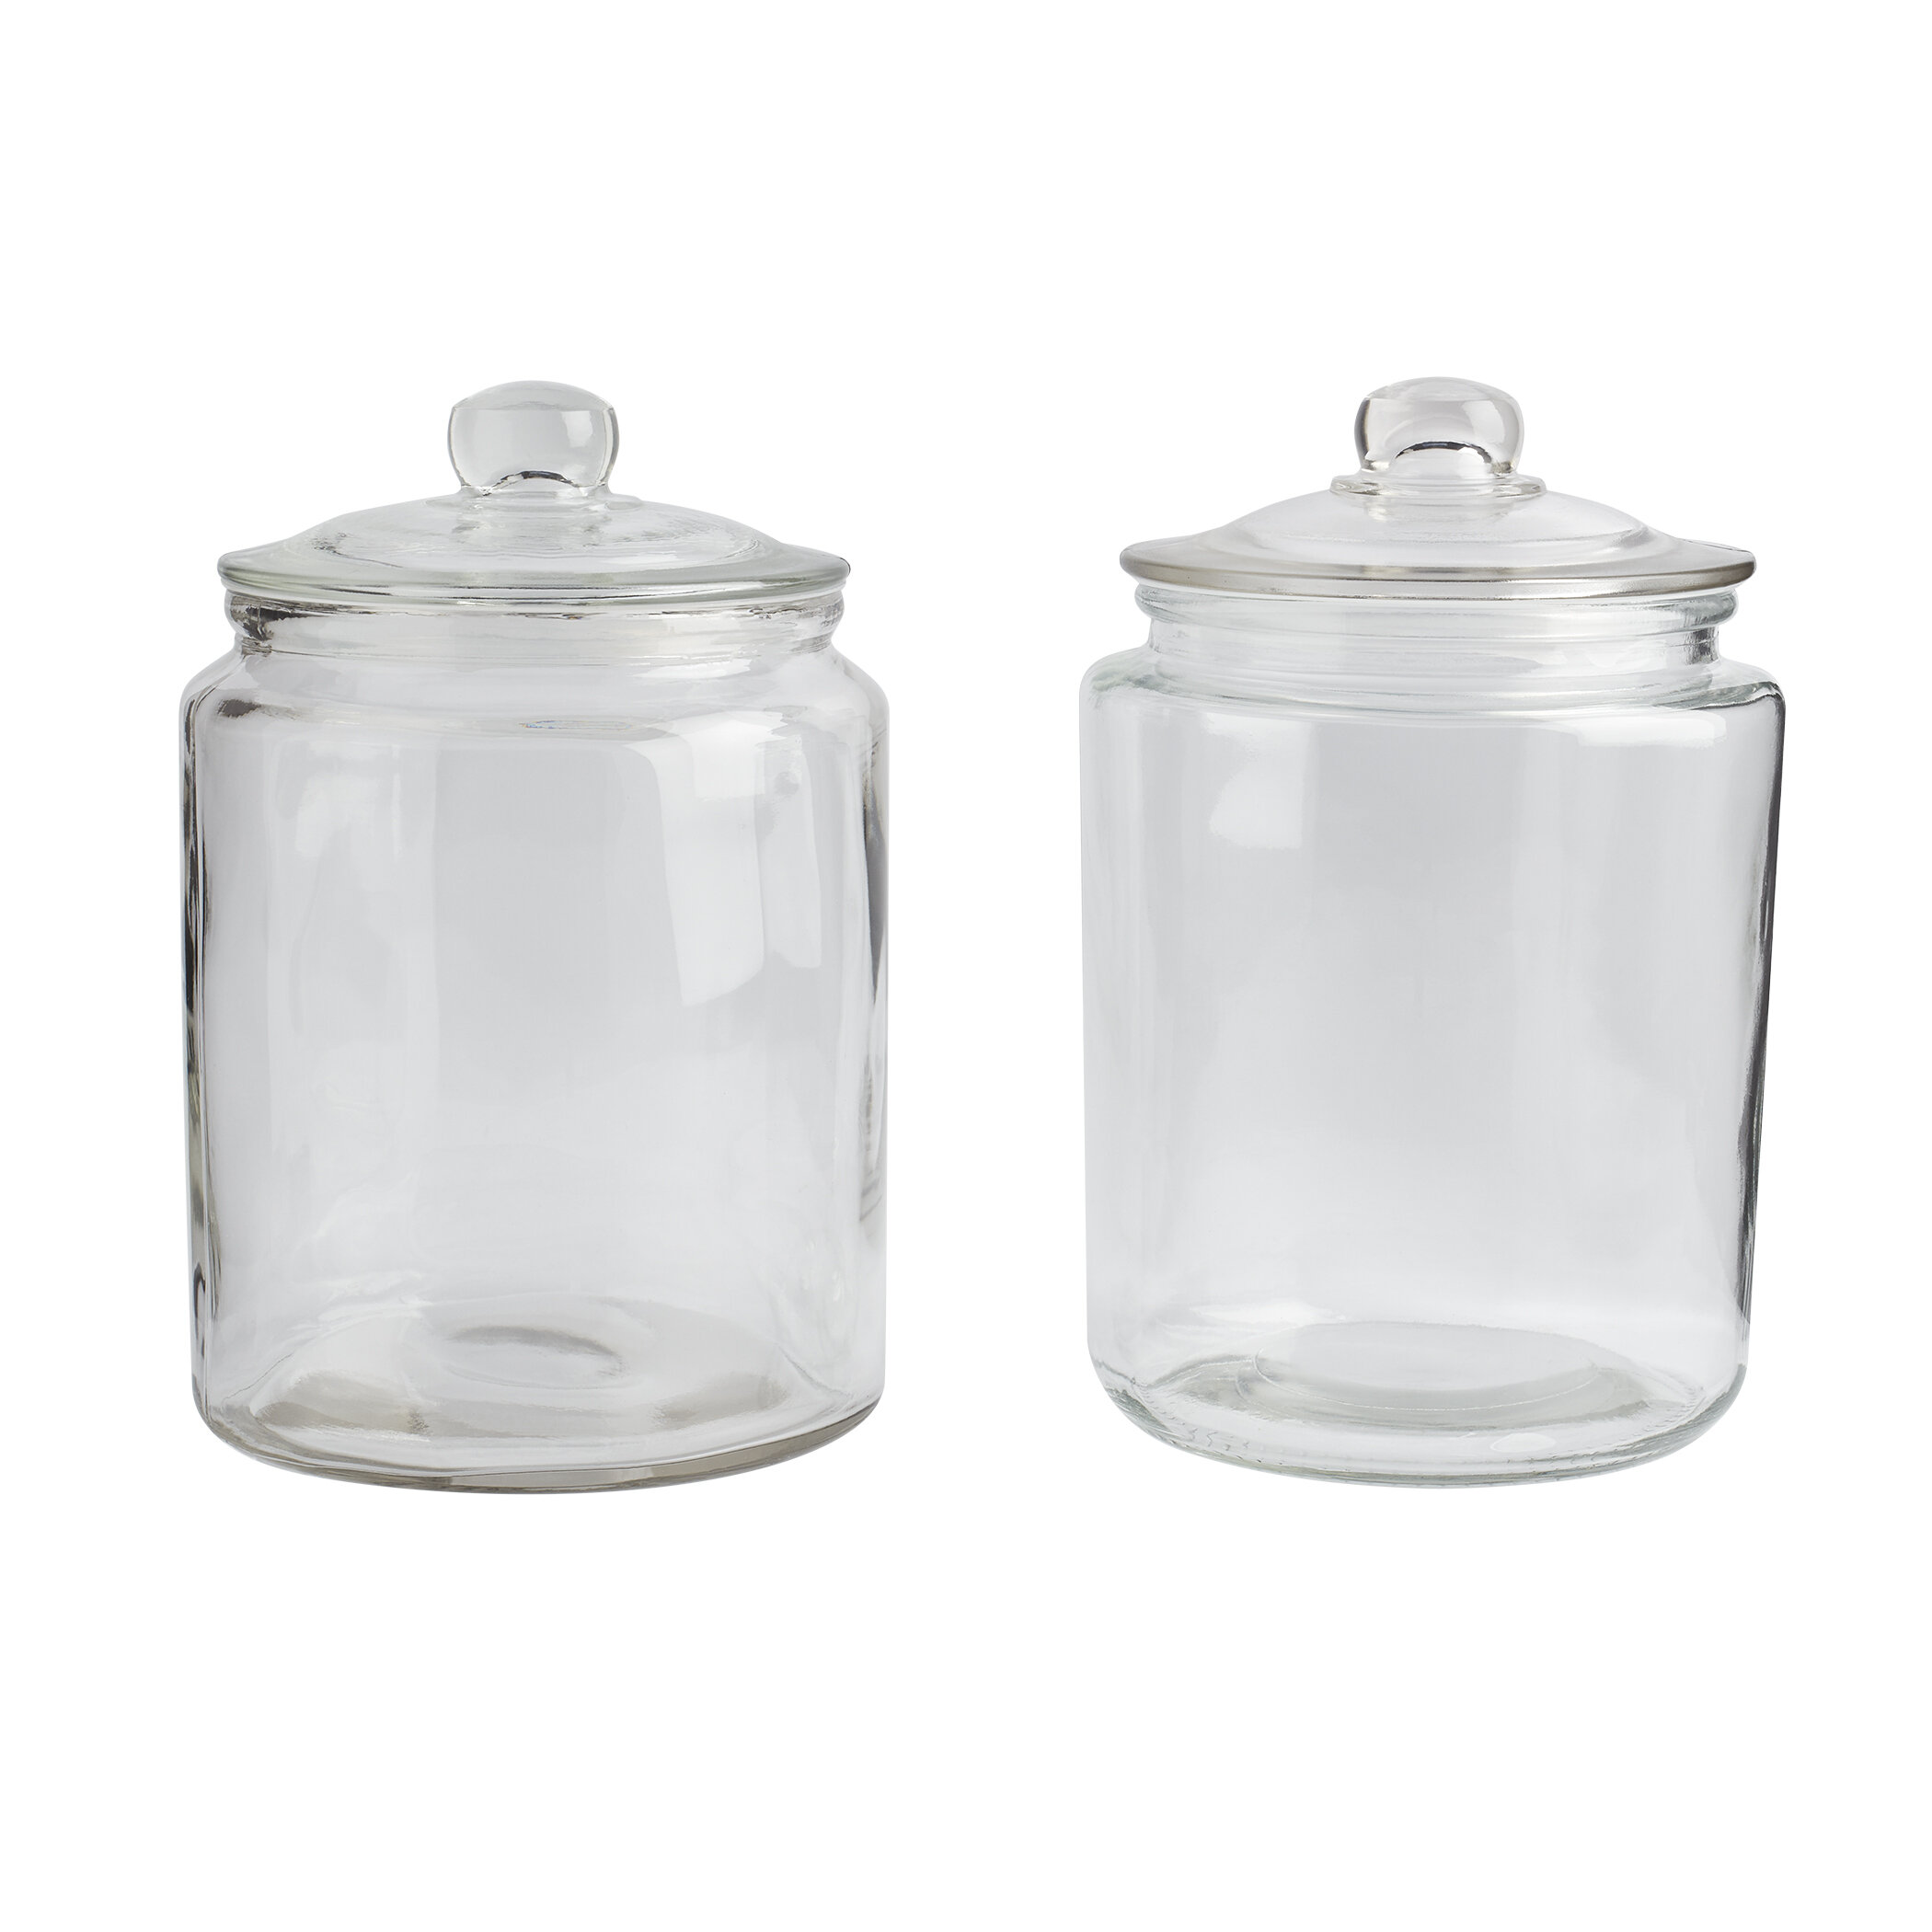 JoyFul Round Glass Cookie Jar with Airtight Lids - 67 oz - Set of 2